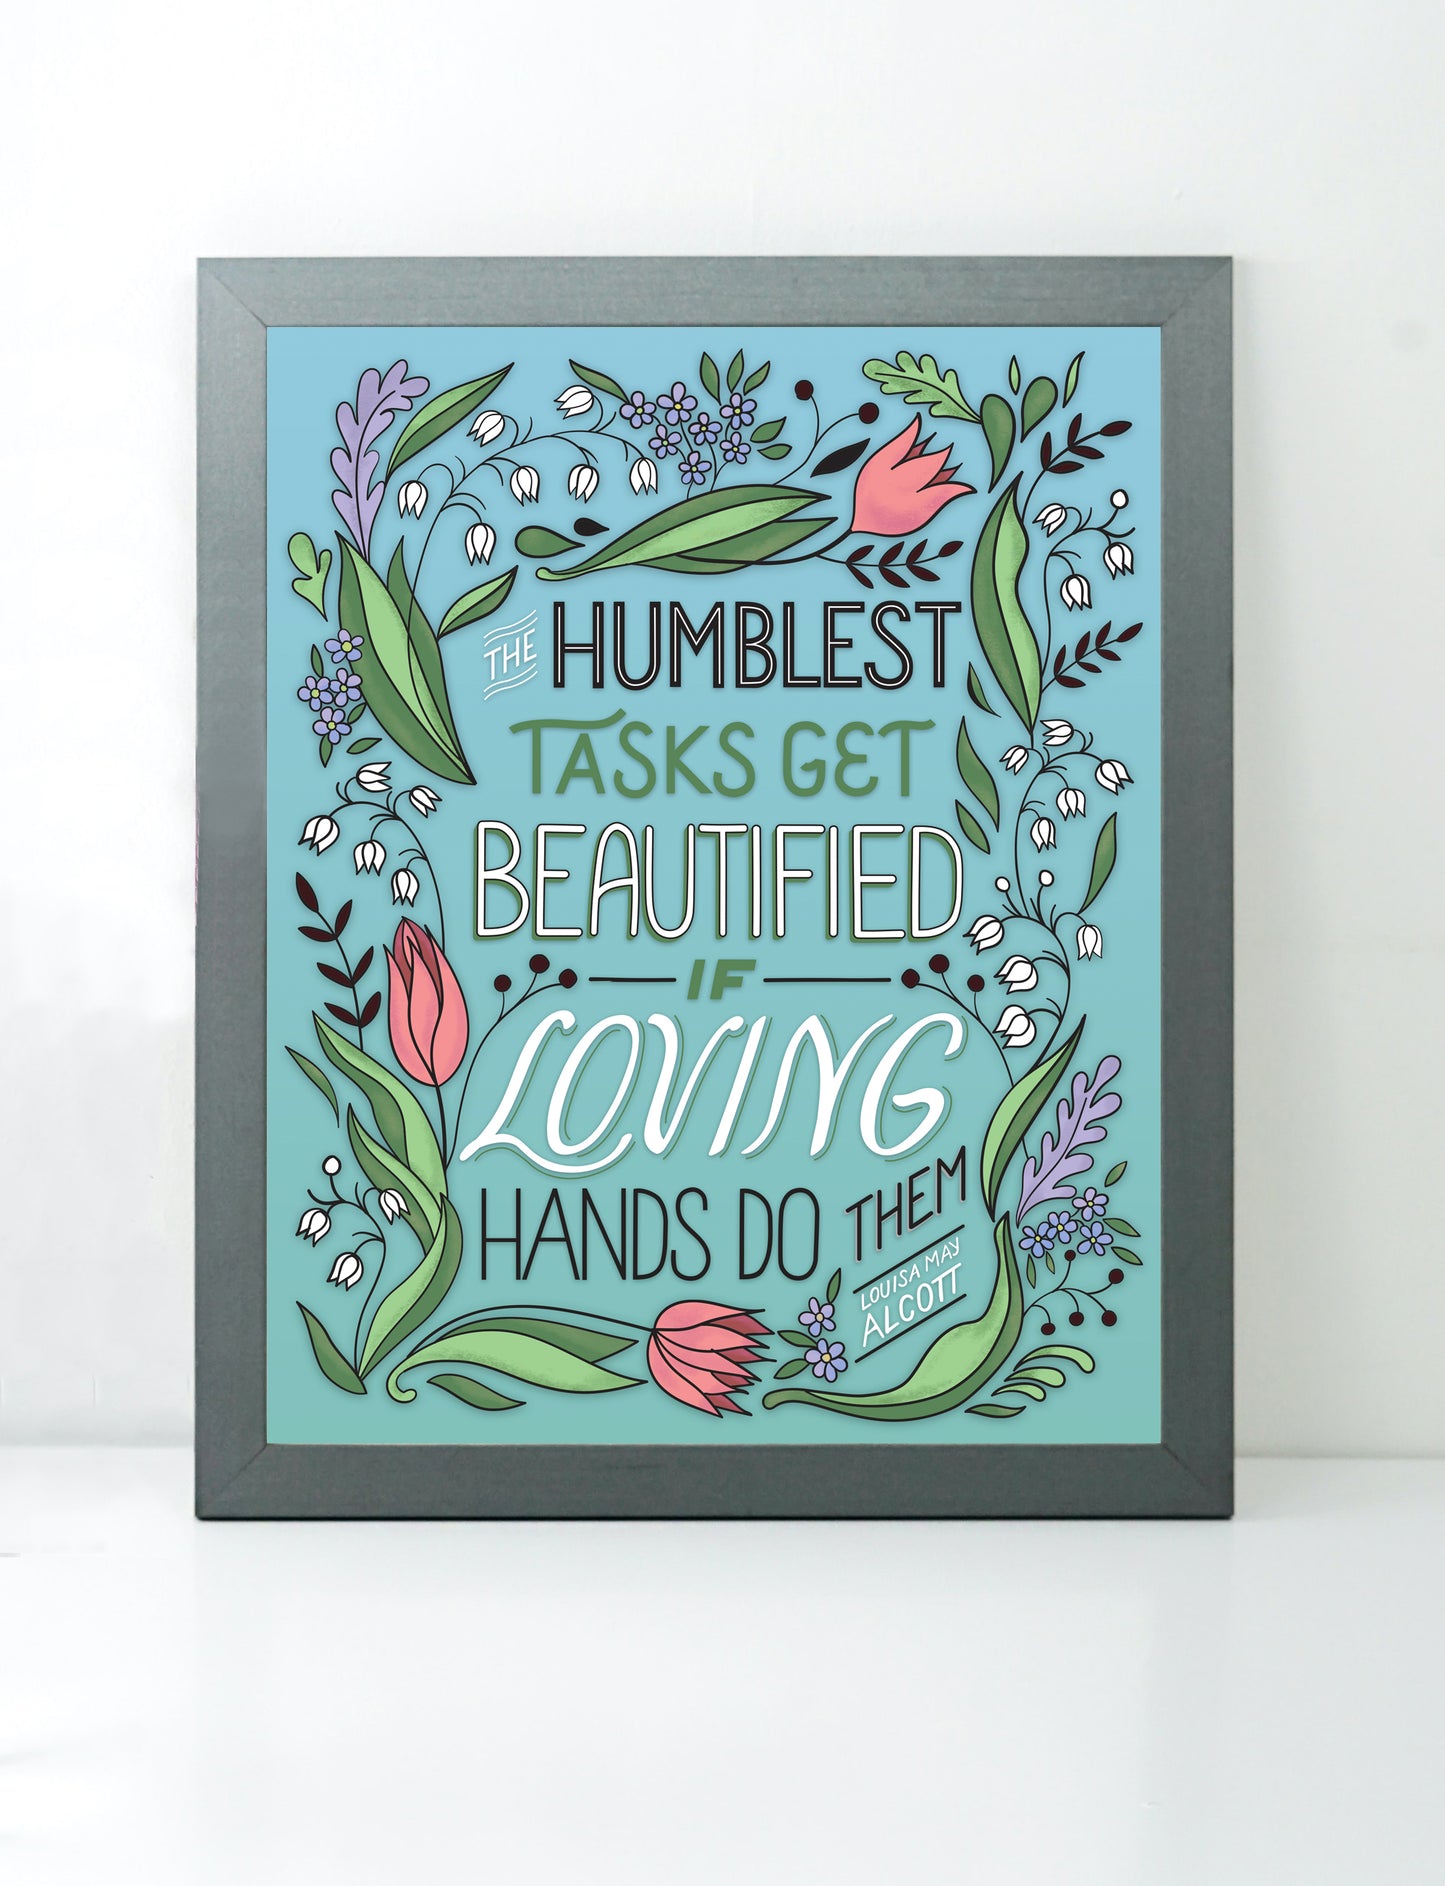 Humblest Tasks Get Beautified art print